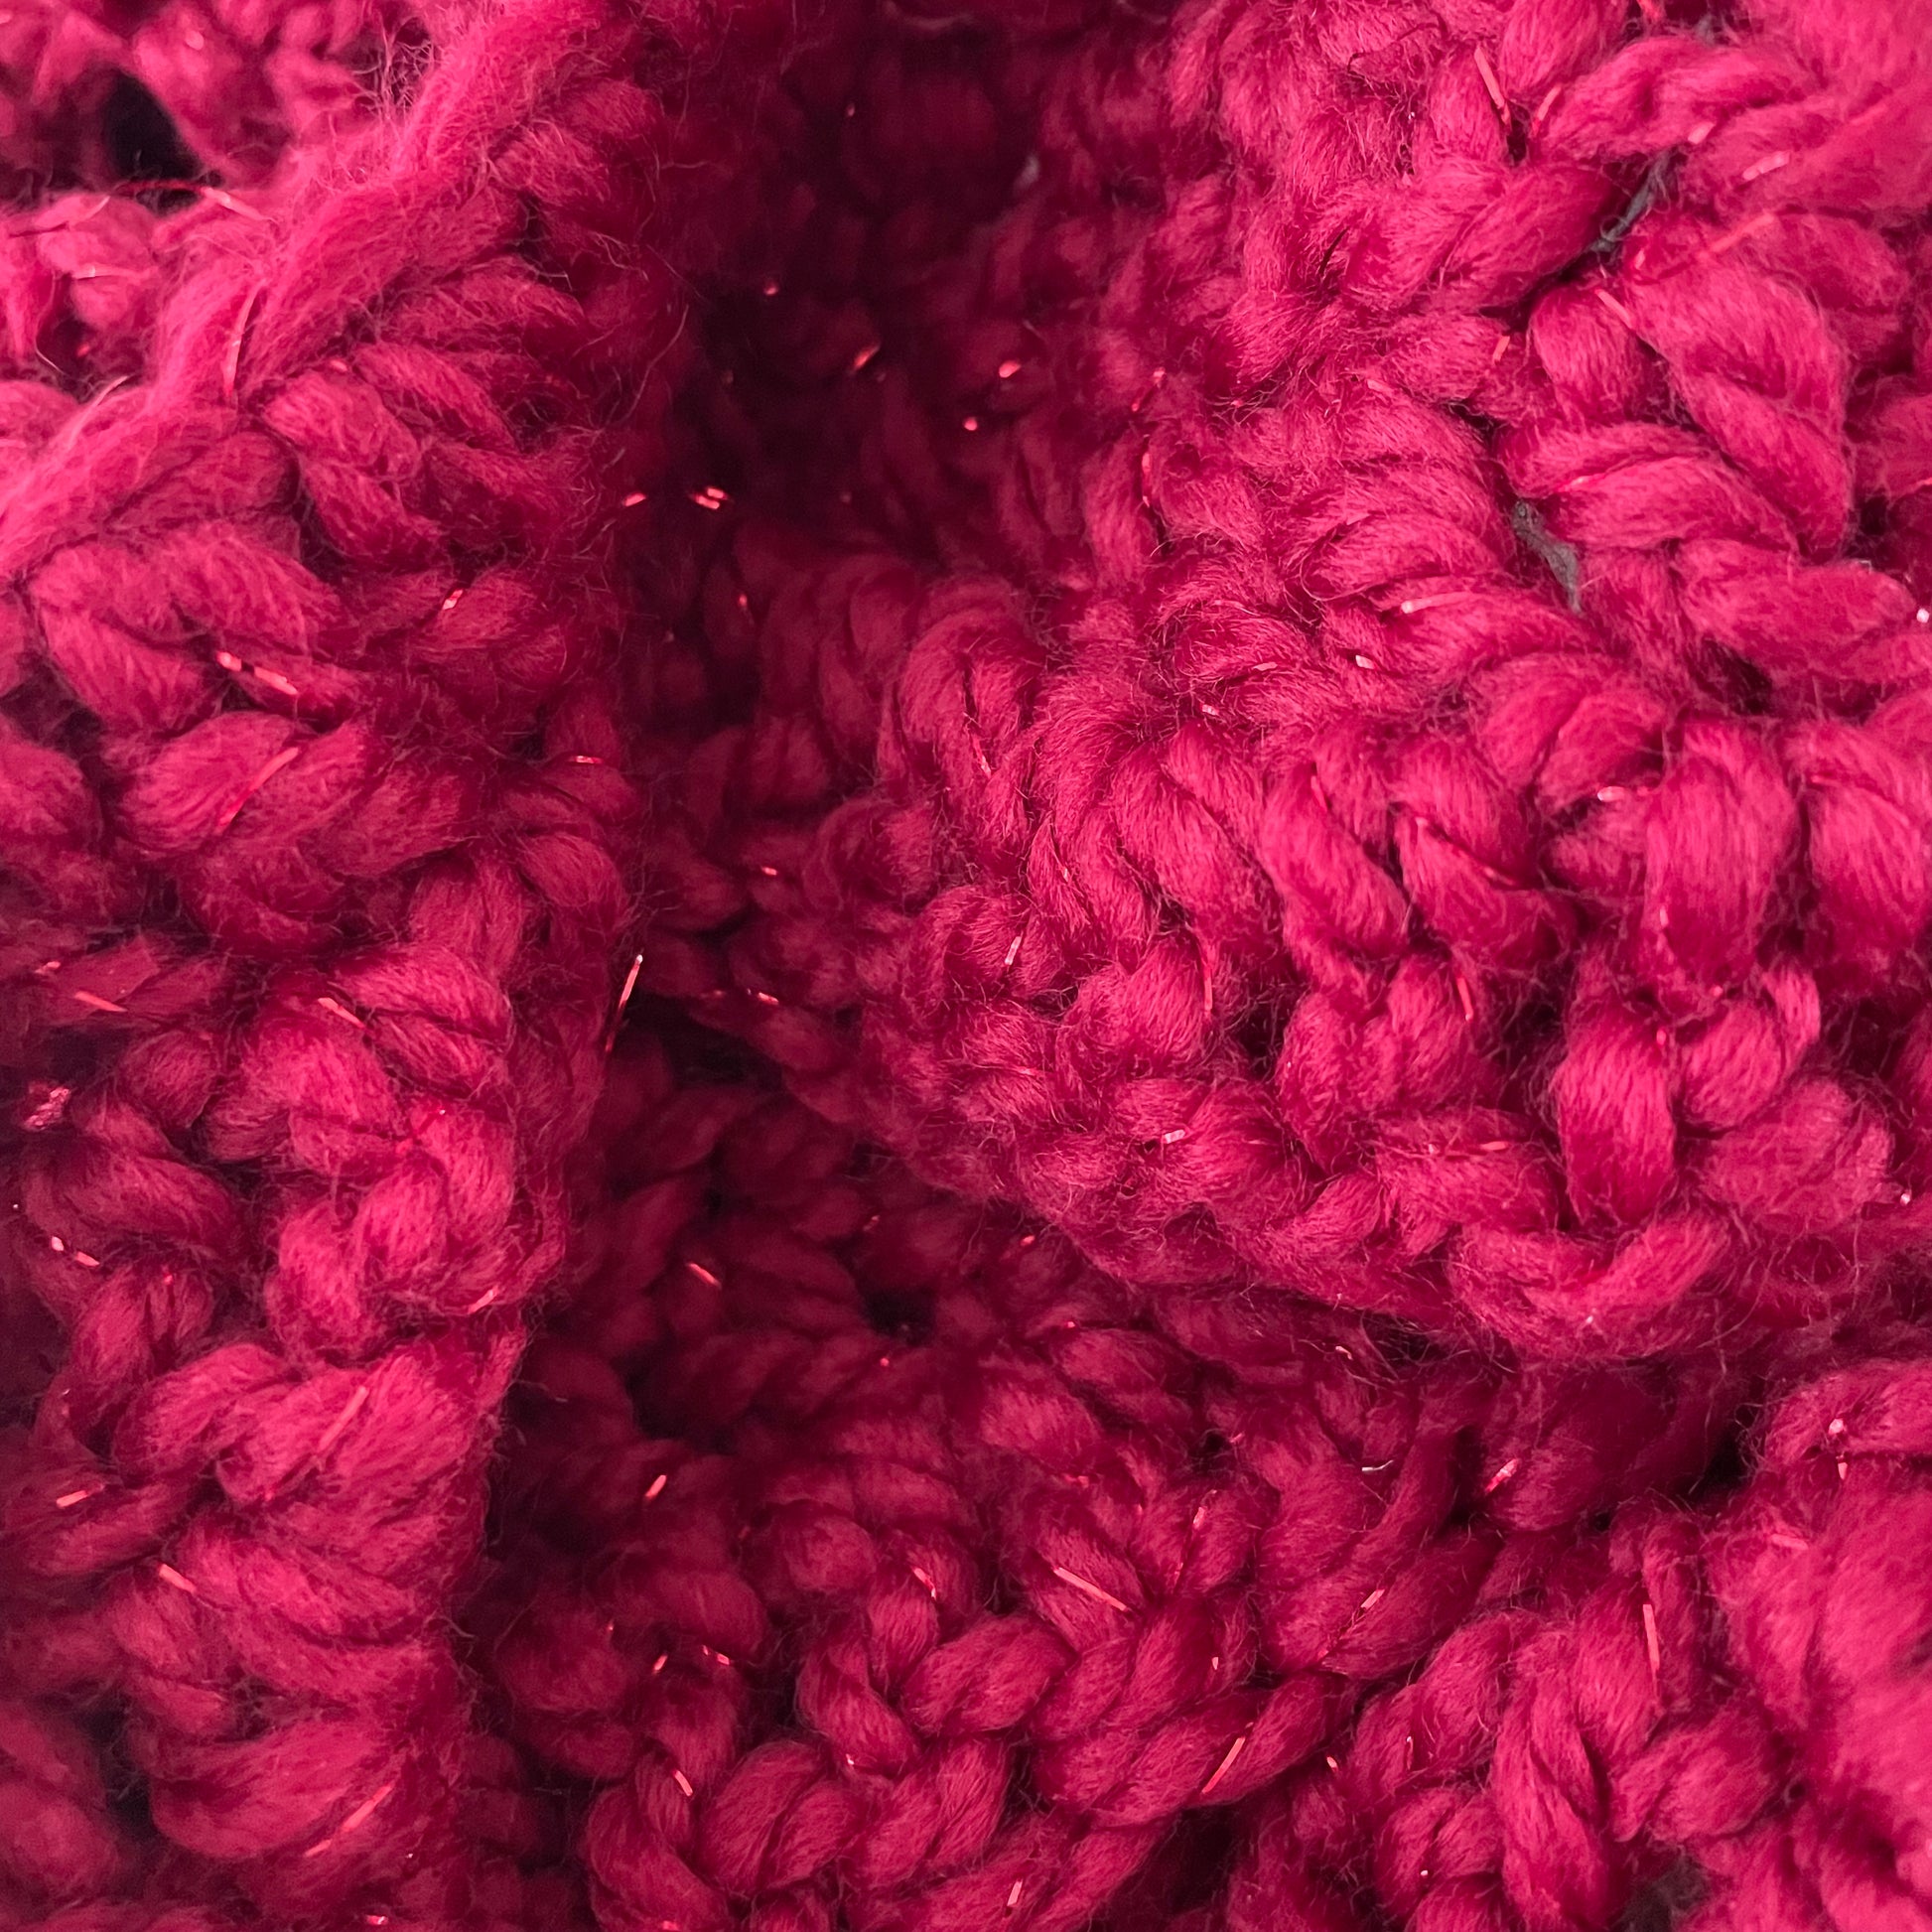 close up of glitter in yarn